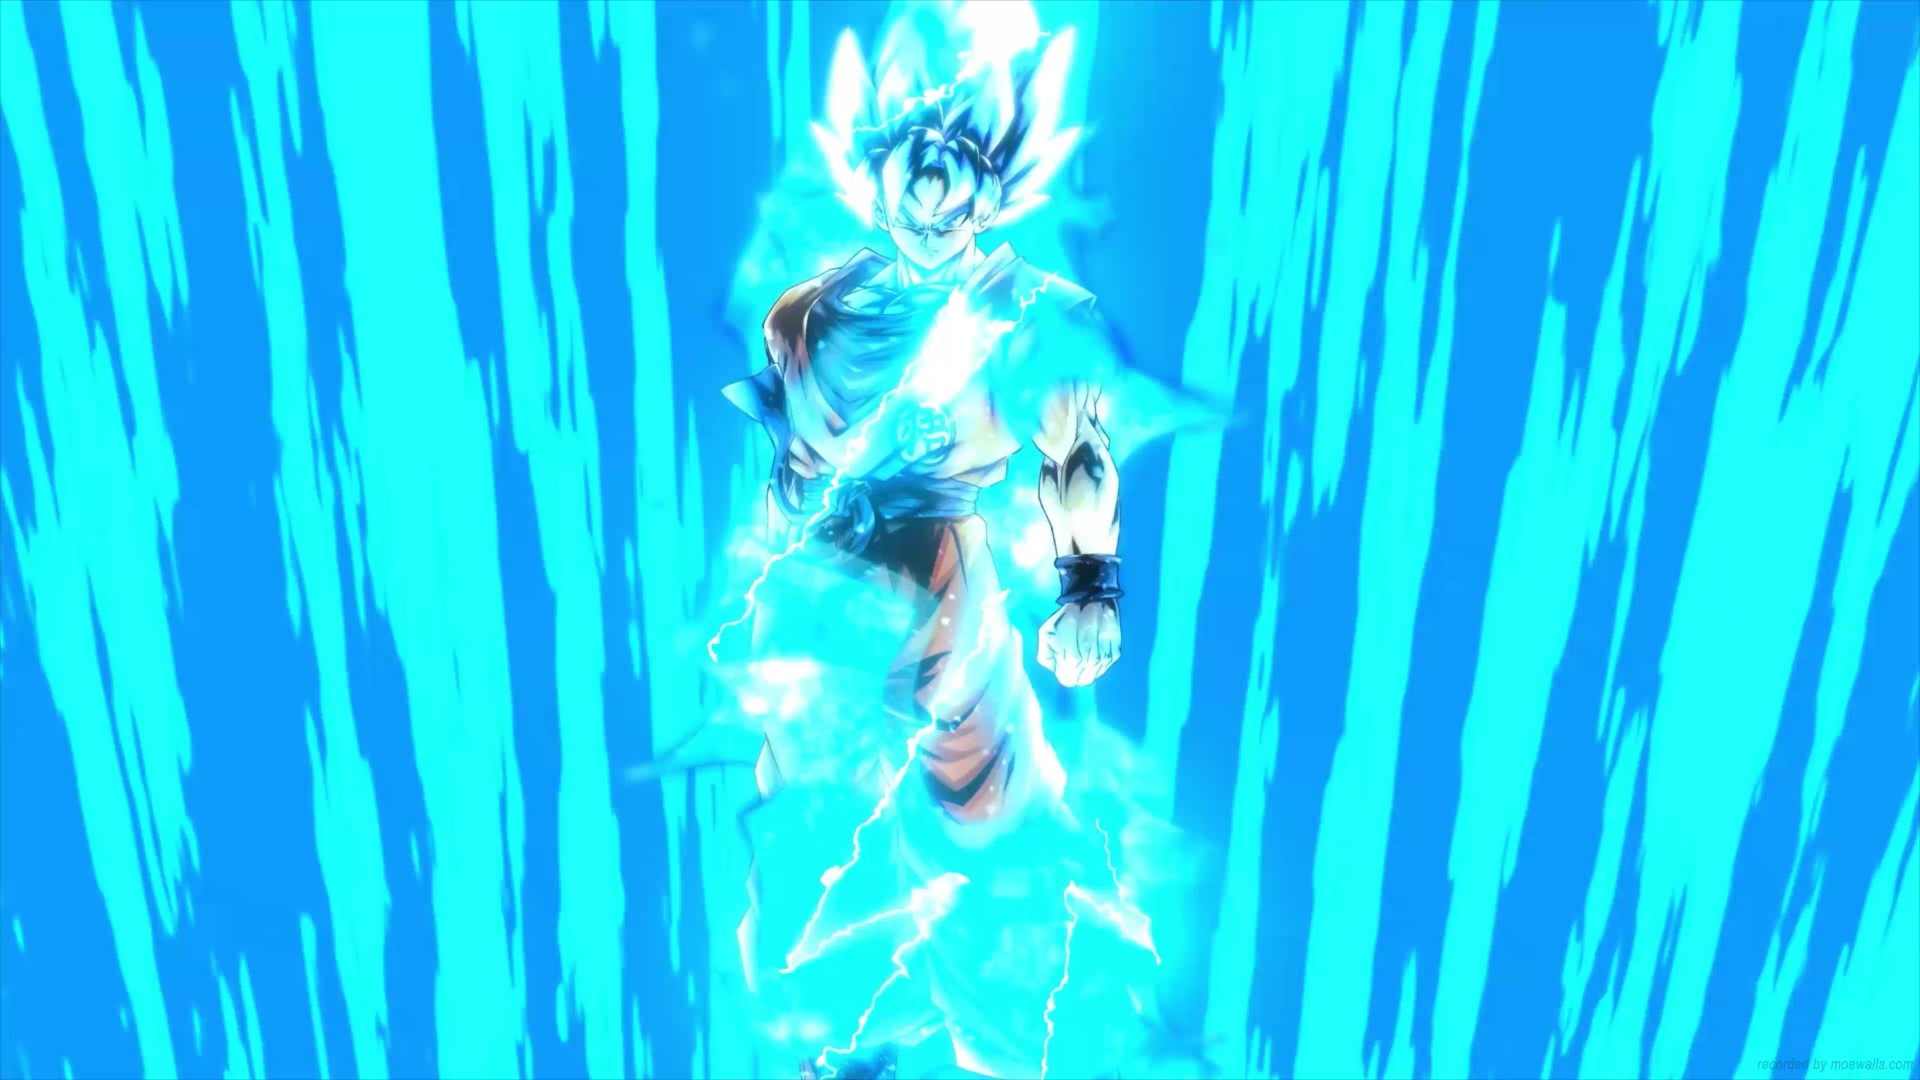 HD wallpaper: Son Goku from Dragonball anime character, Dragon